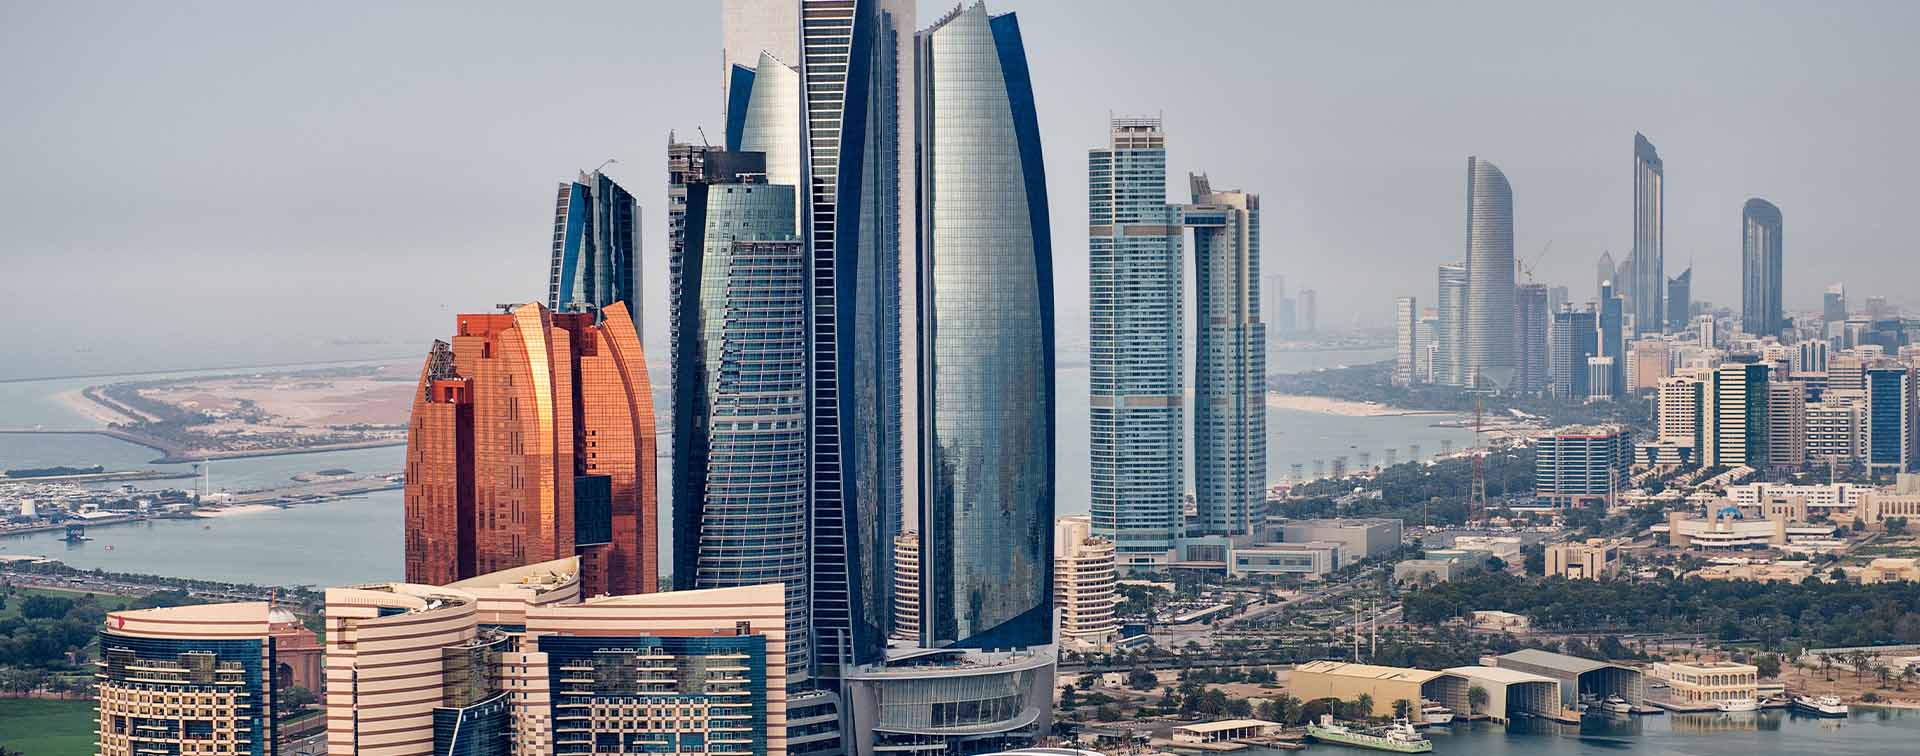 Modern skyscrapers in Abu Dhabi, UAE